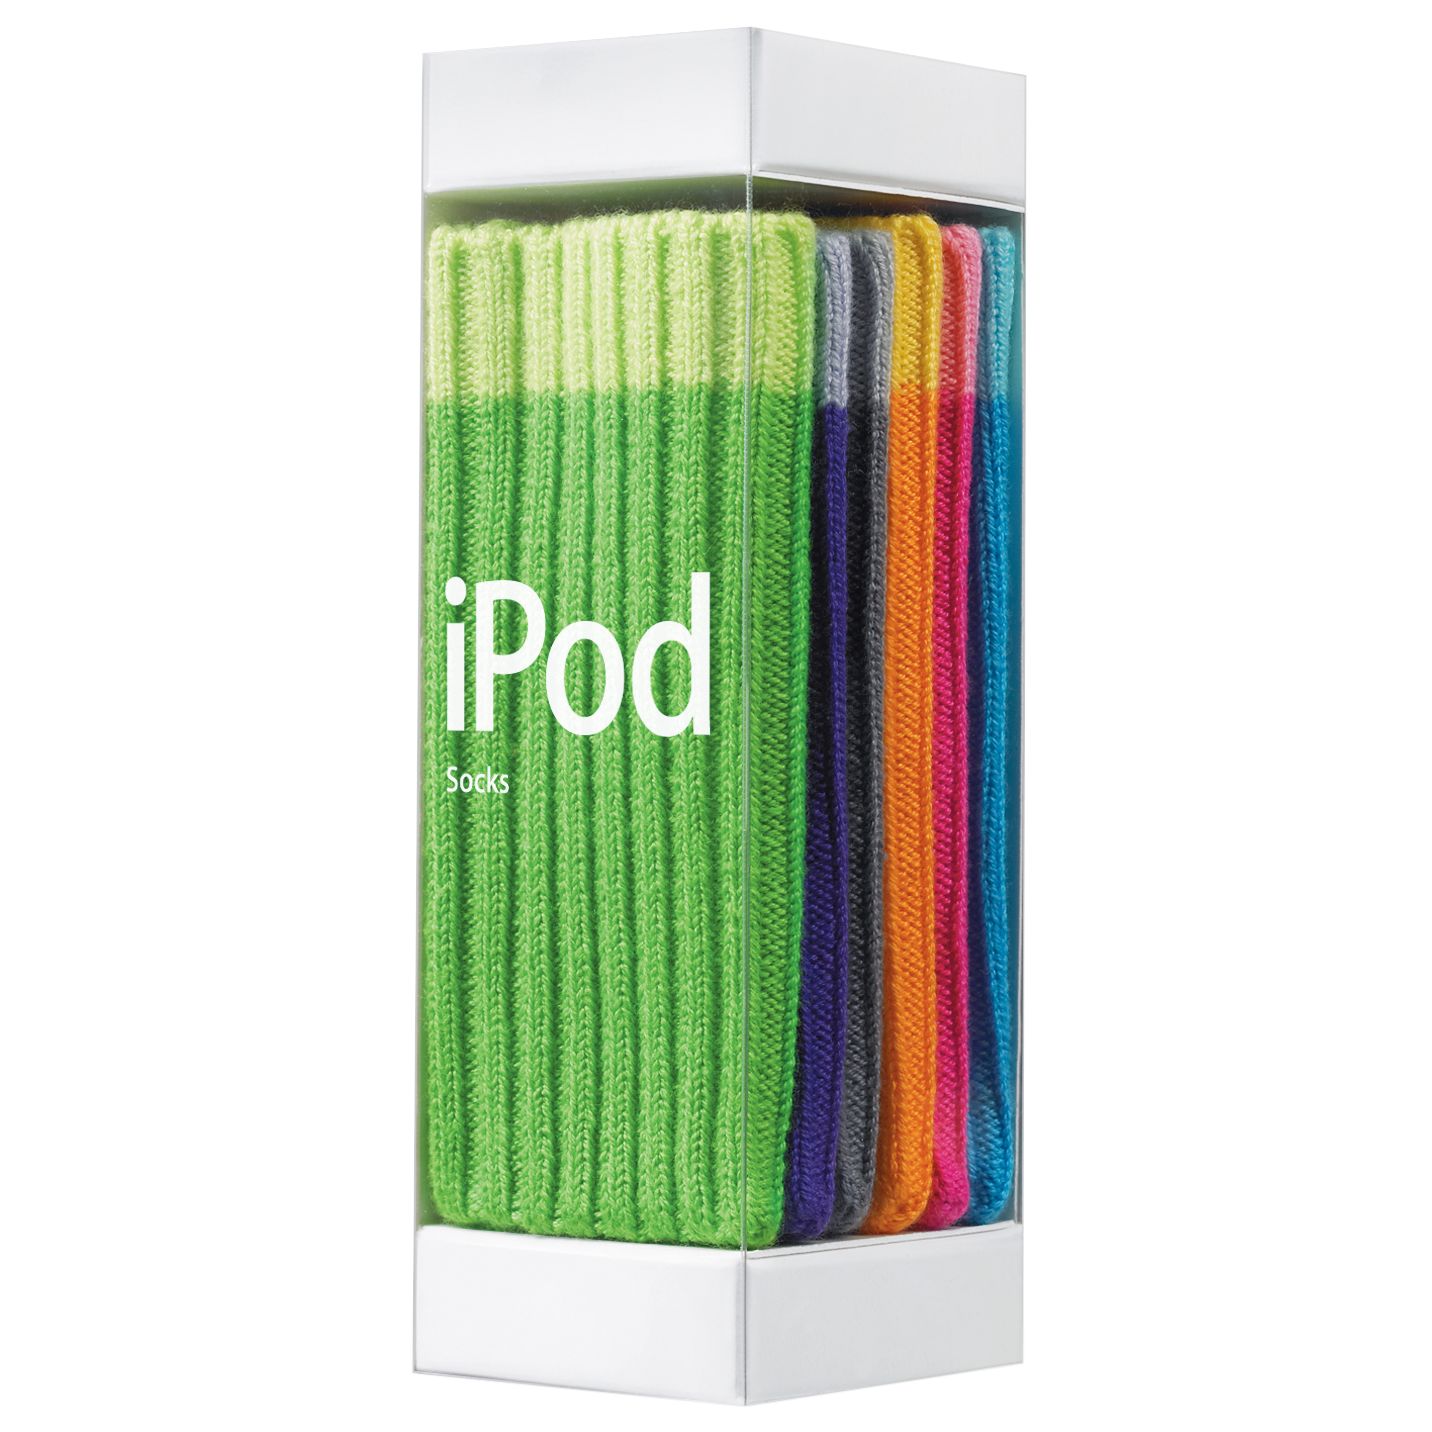 iPod Socks, Pack of 6